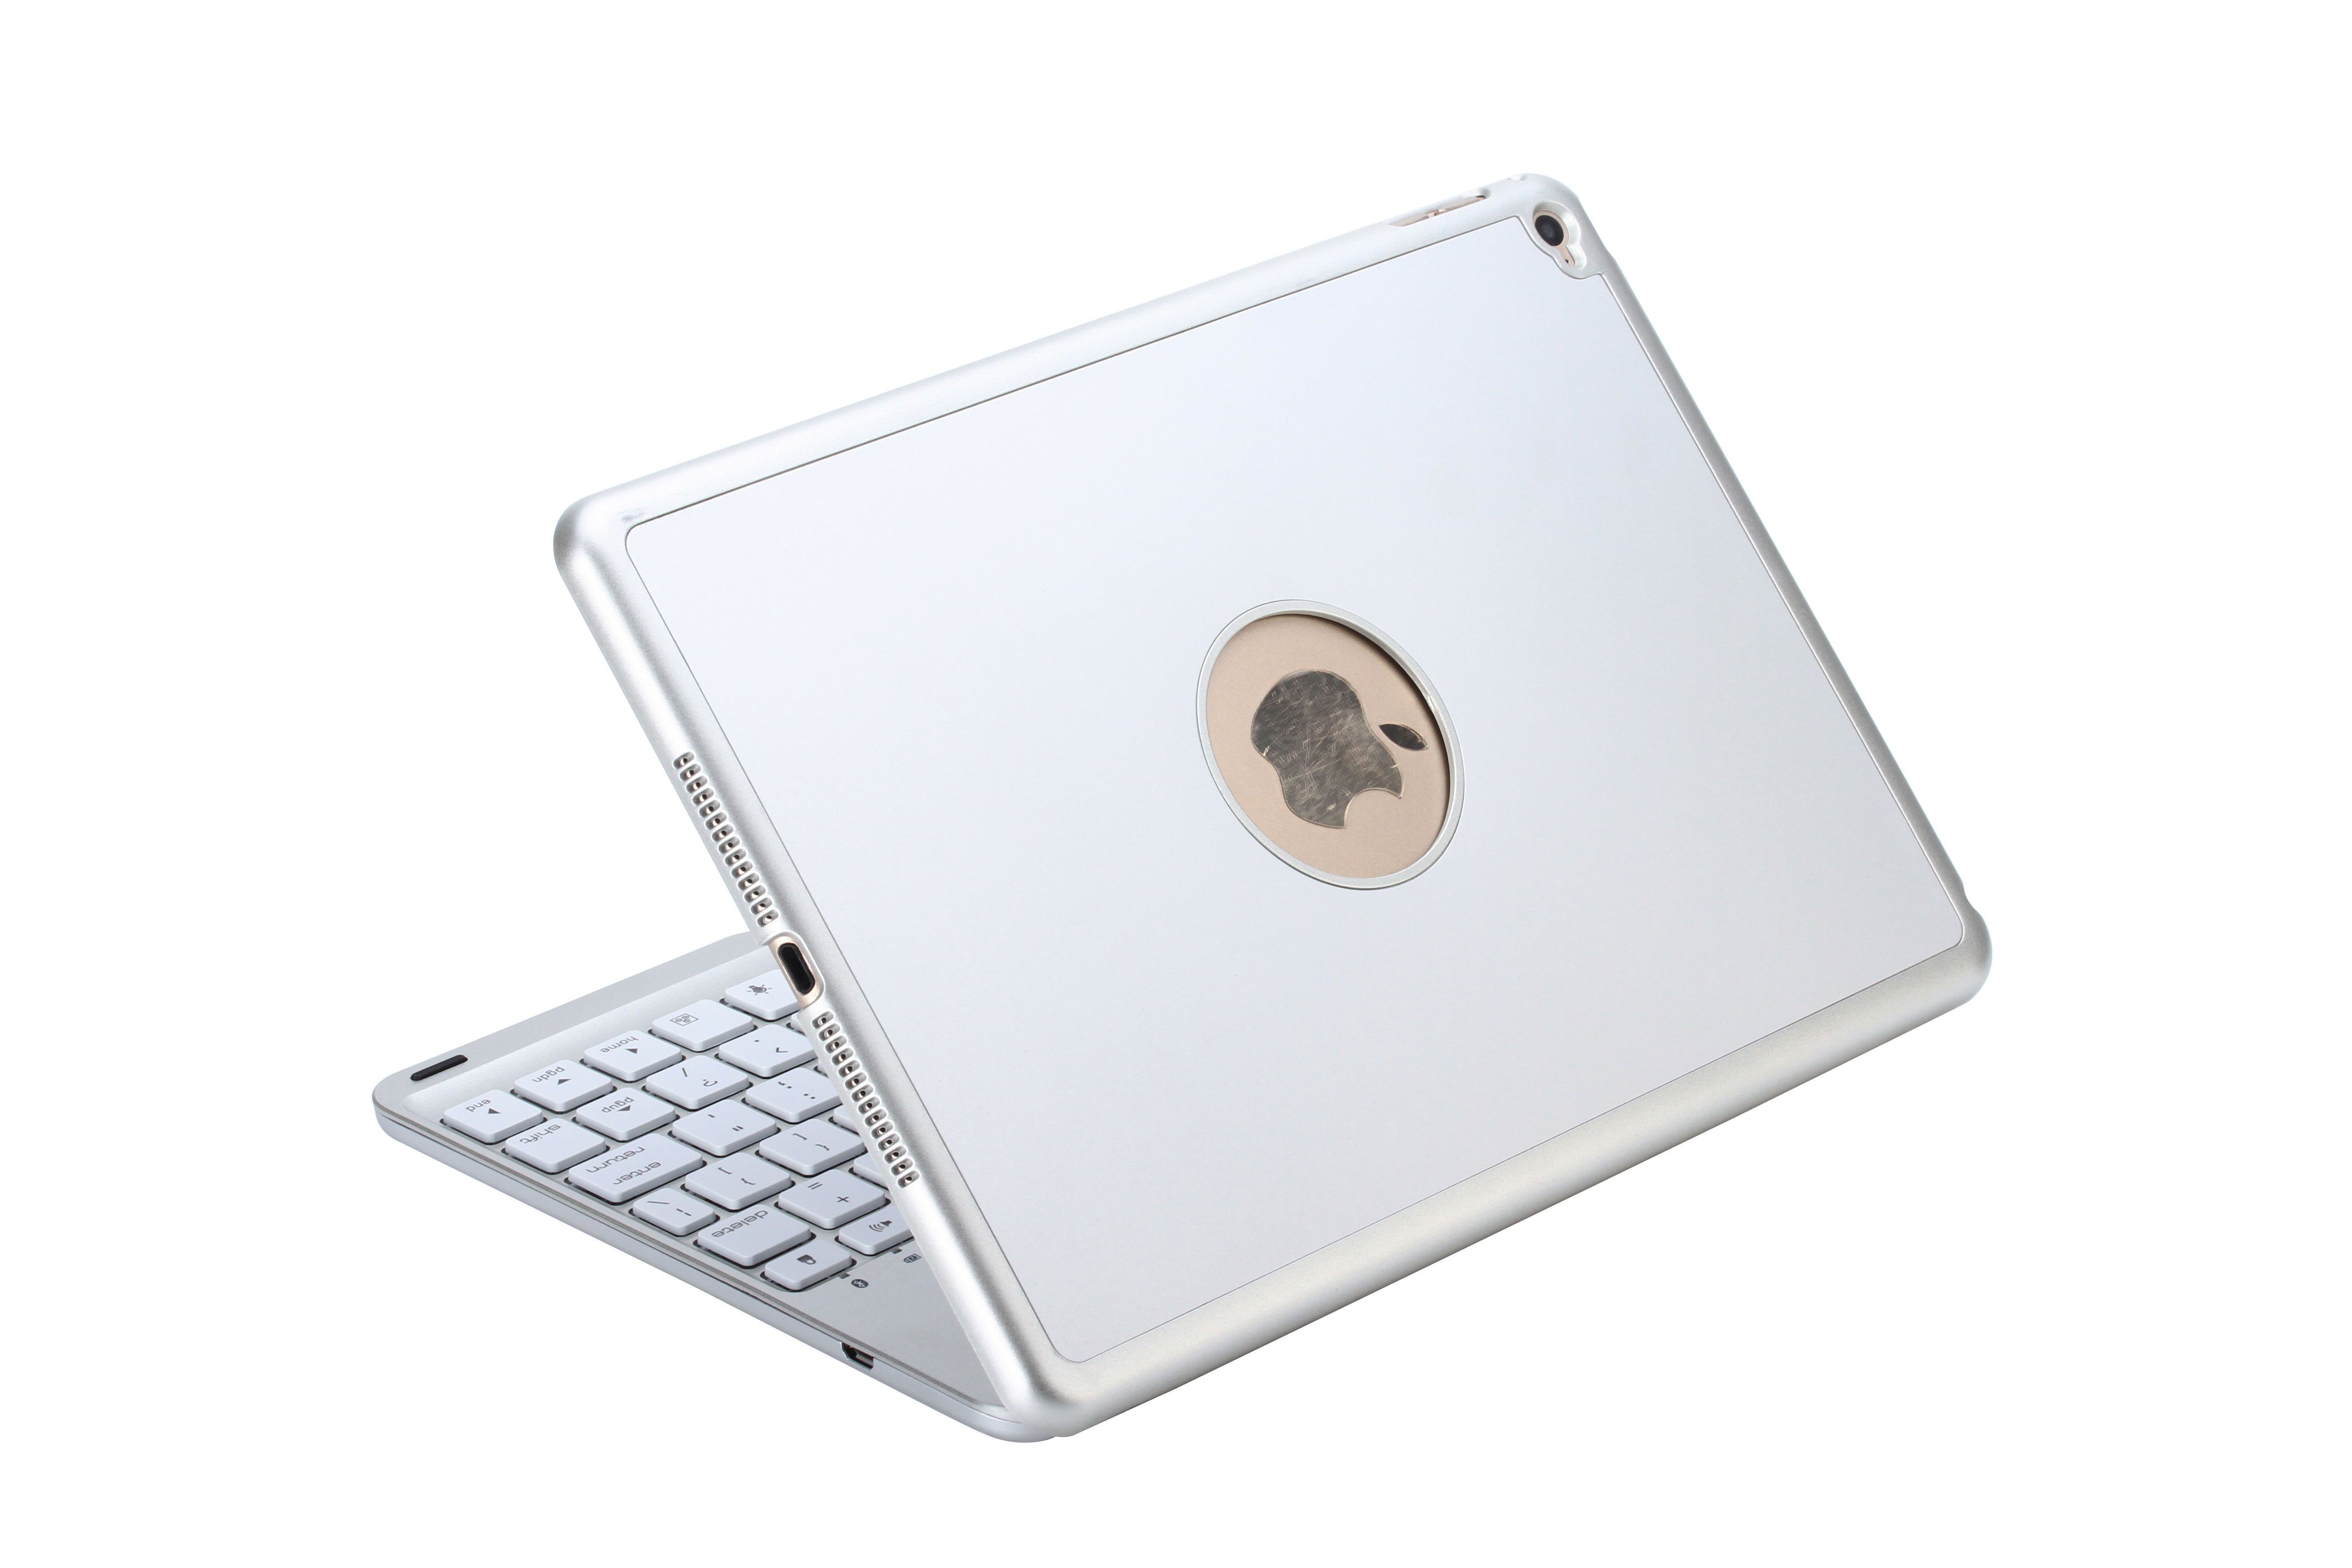 F8S+  ipadair2蓝牙键盘铝合金笔记本翻盖保护壳 七彩背光蓝牙键盘